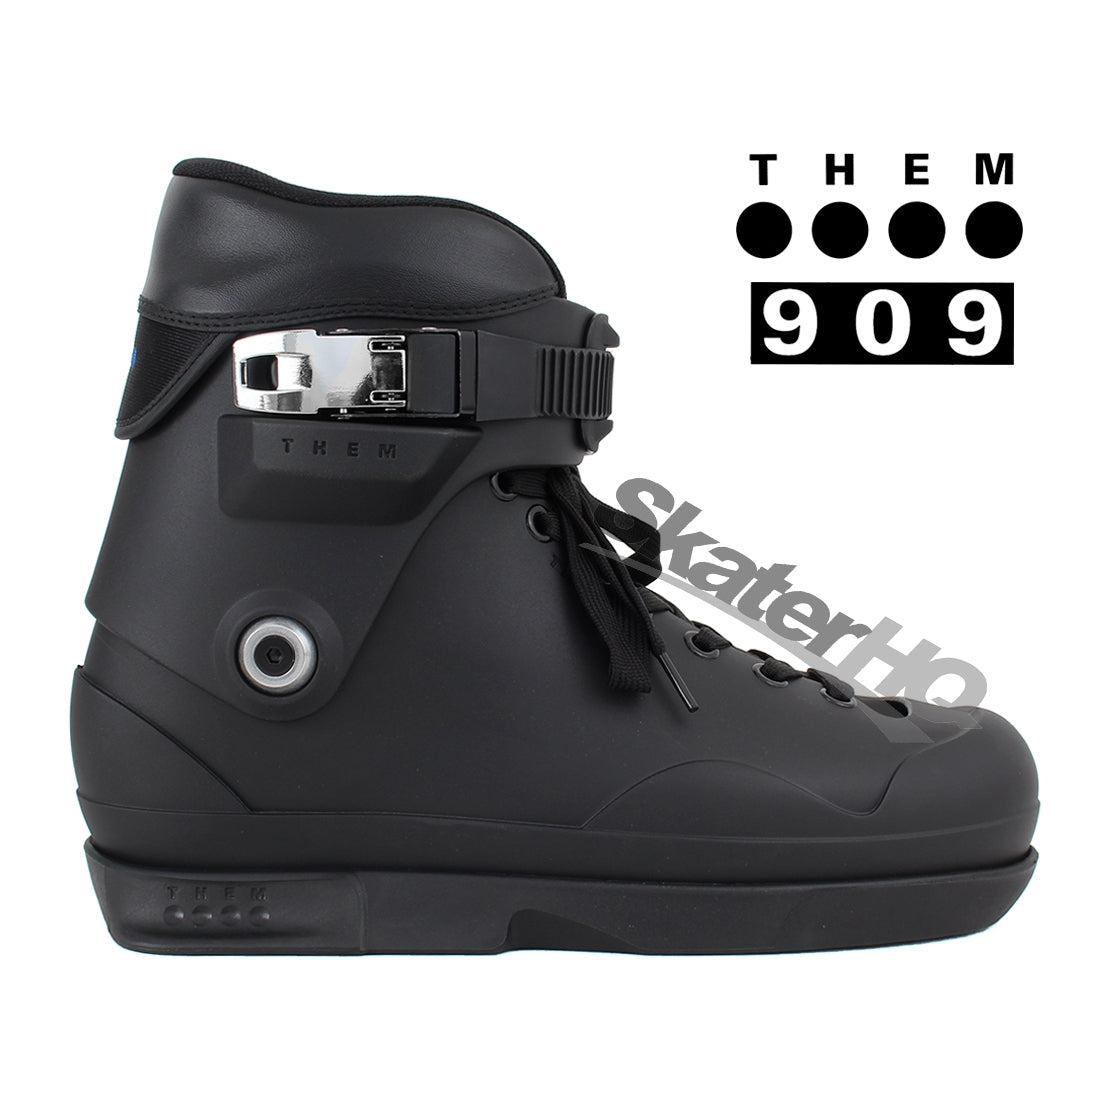 THEM 909 Boot Black 7-8US Inline Aggressive Skates